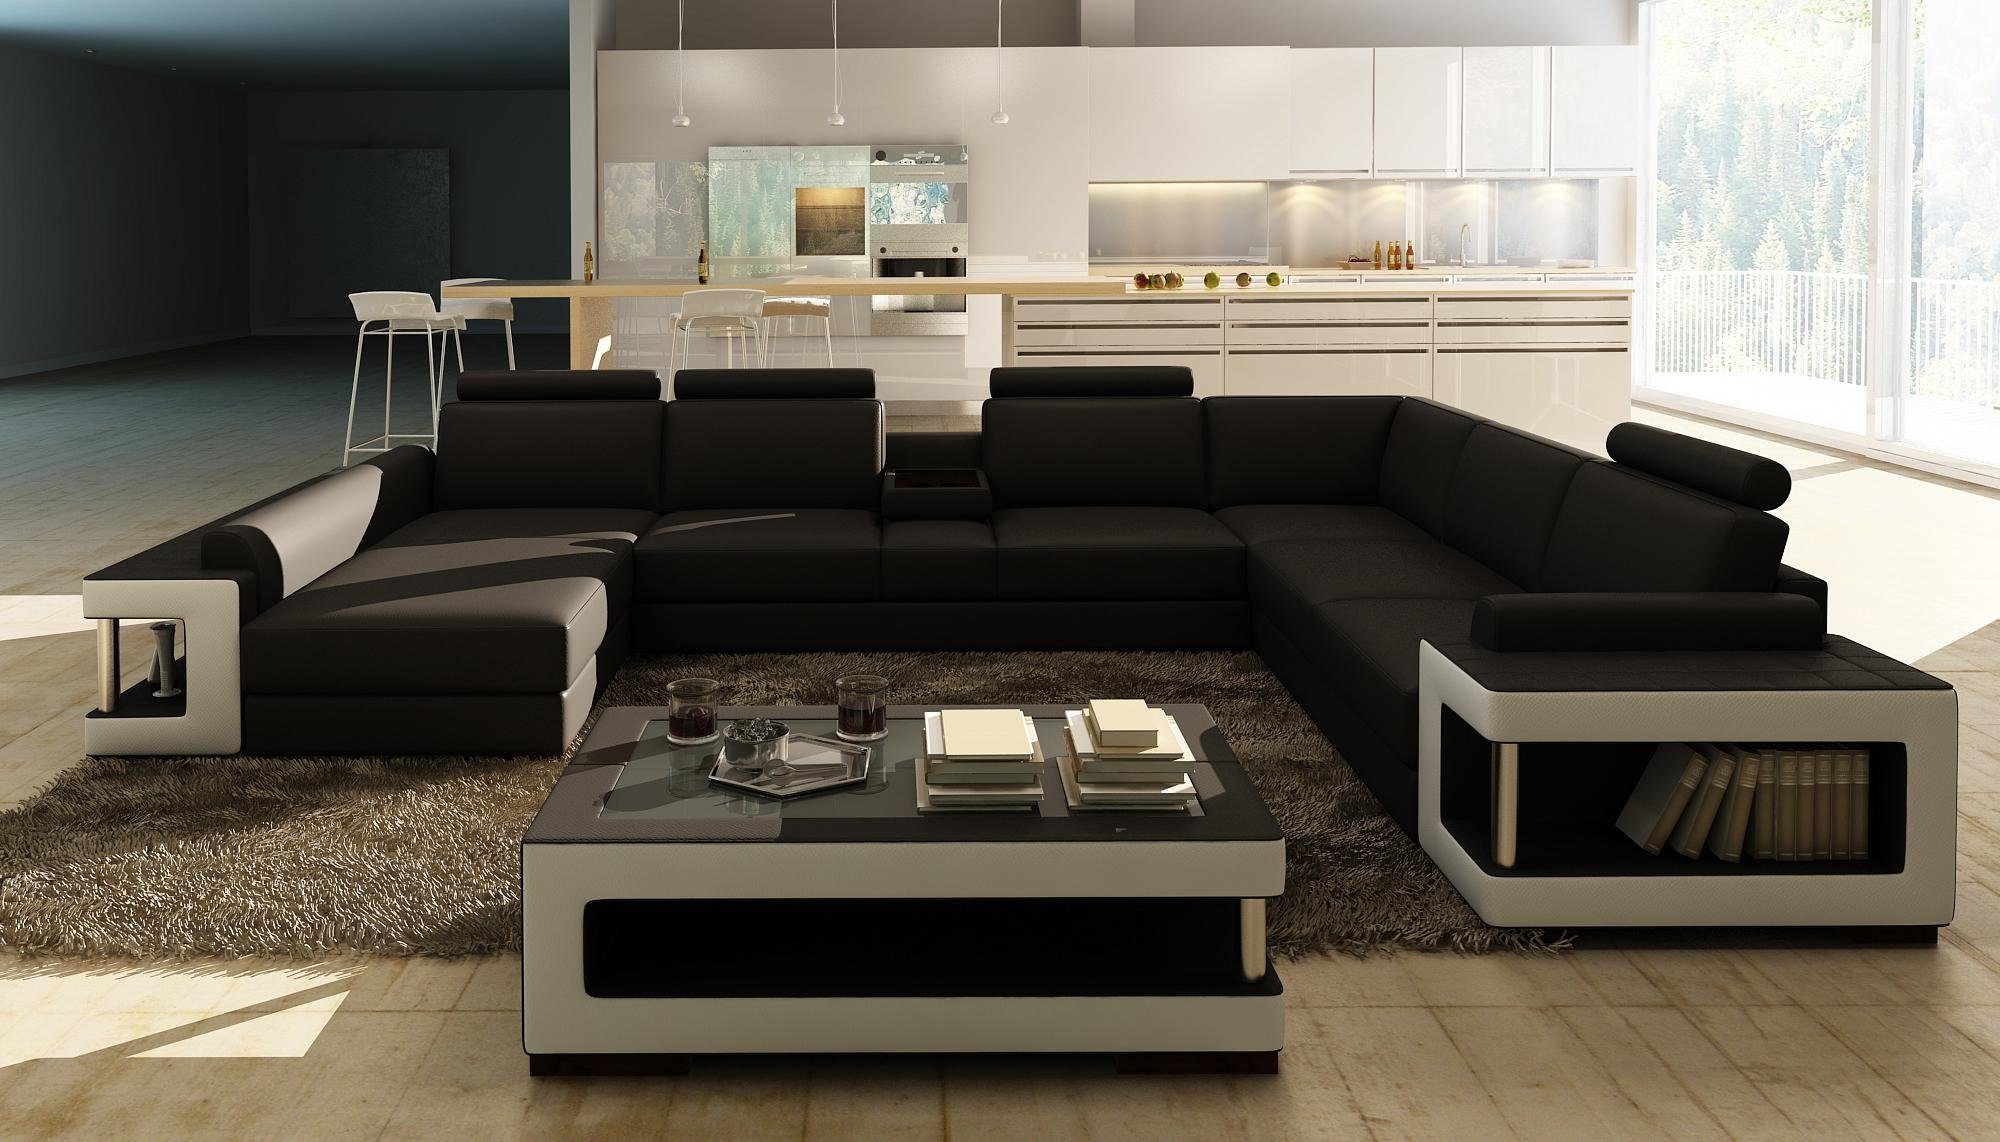 JVmoebel Ecksofa Wohnlandschaft Luxus Trend Kollektion Couch Ledersofa Sofa U Form, Made in Europe Schwarz